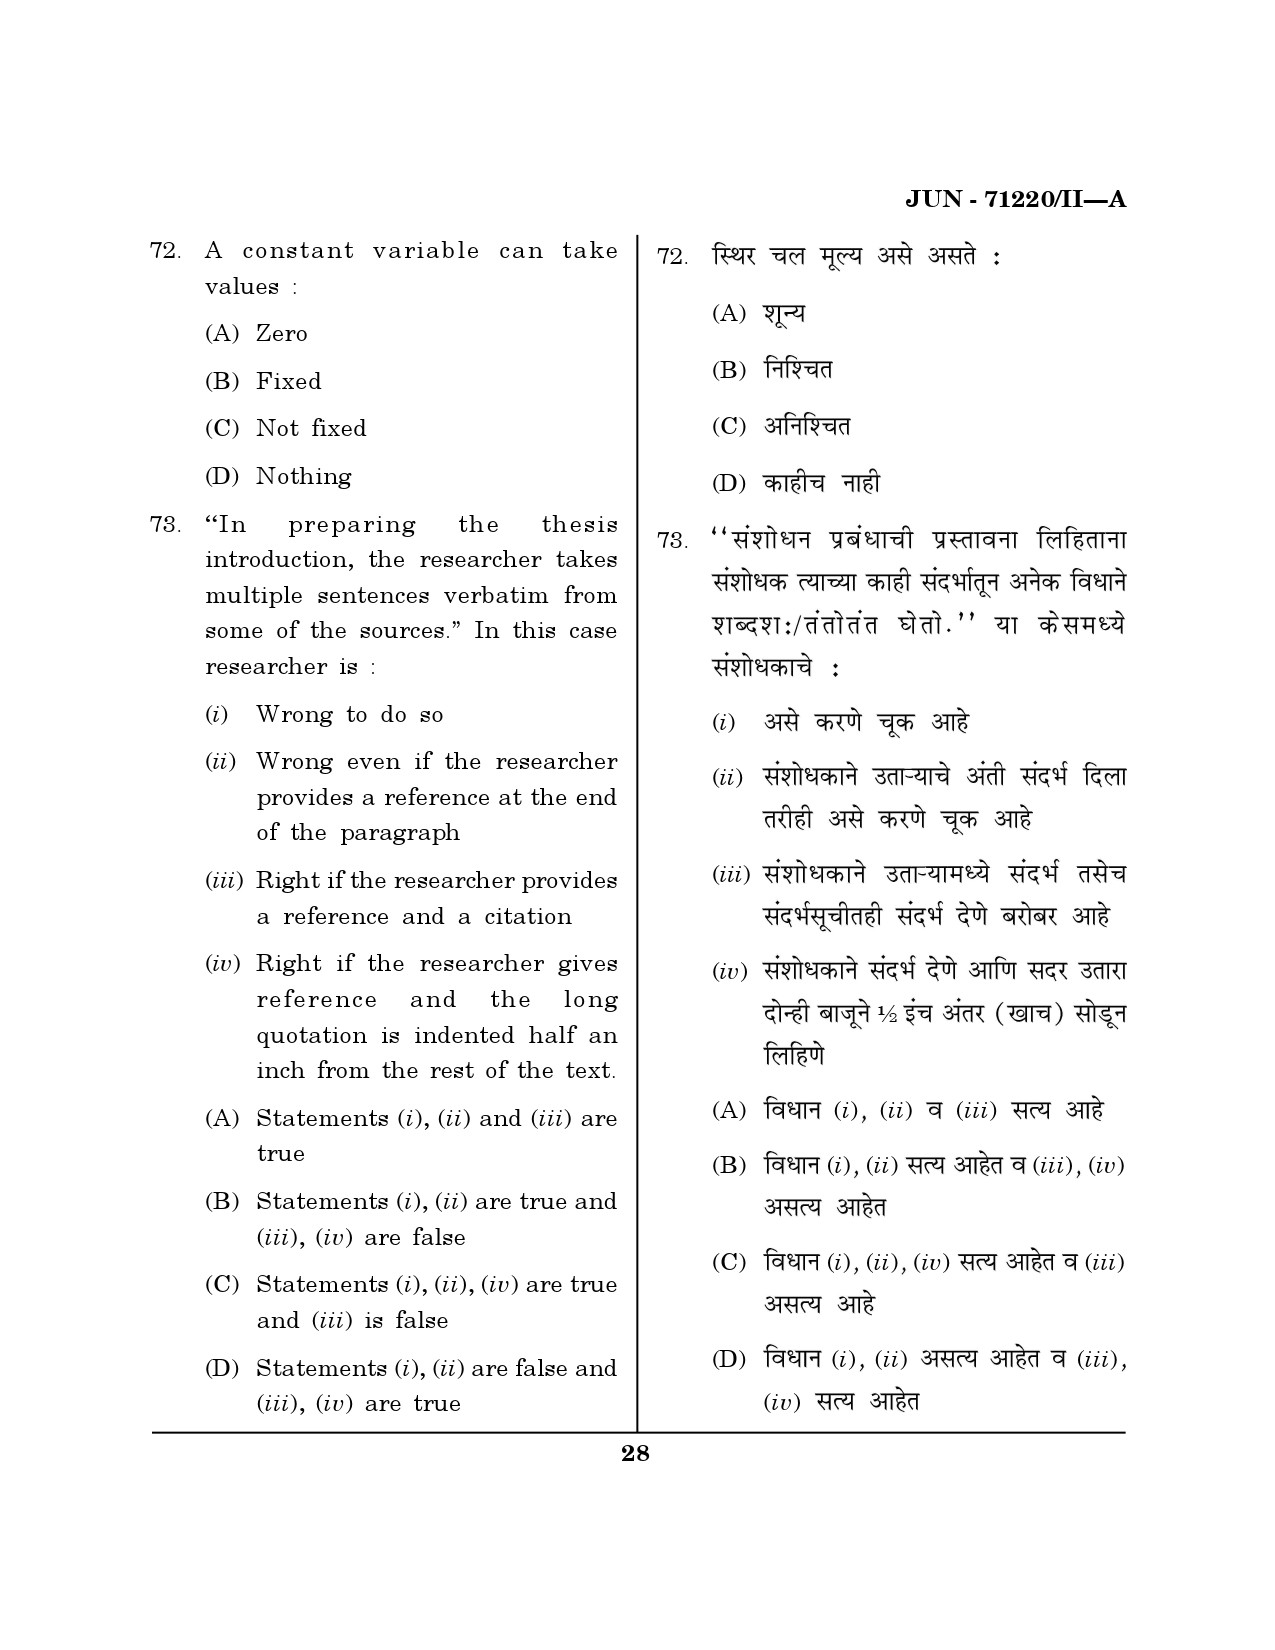 Maharashtra SET Physical Education Question Paper II June 2020 27